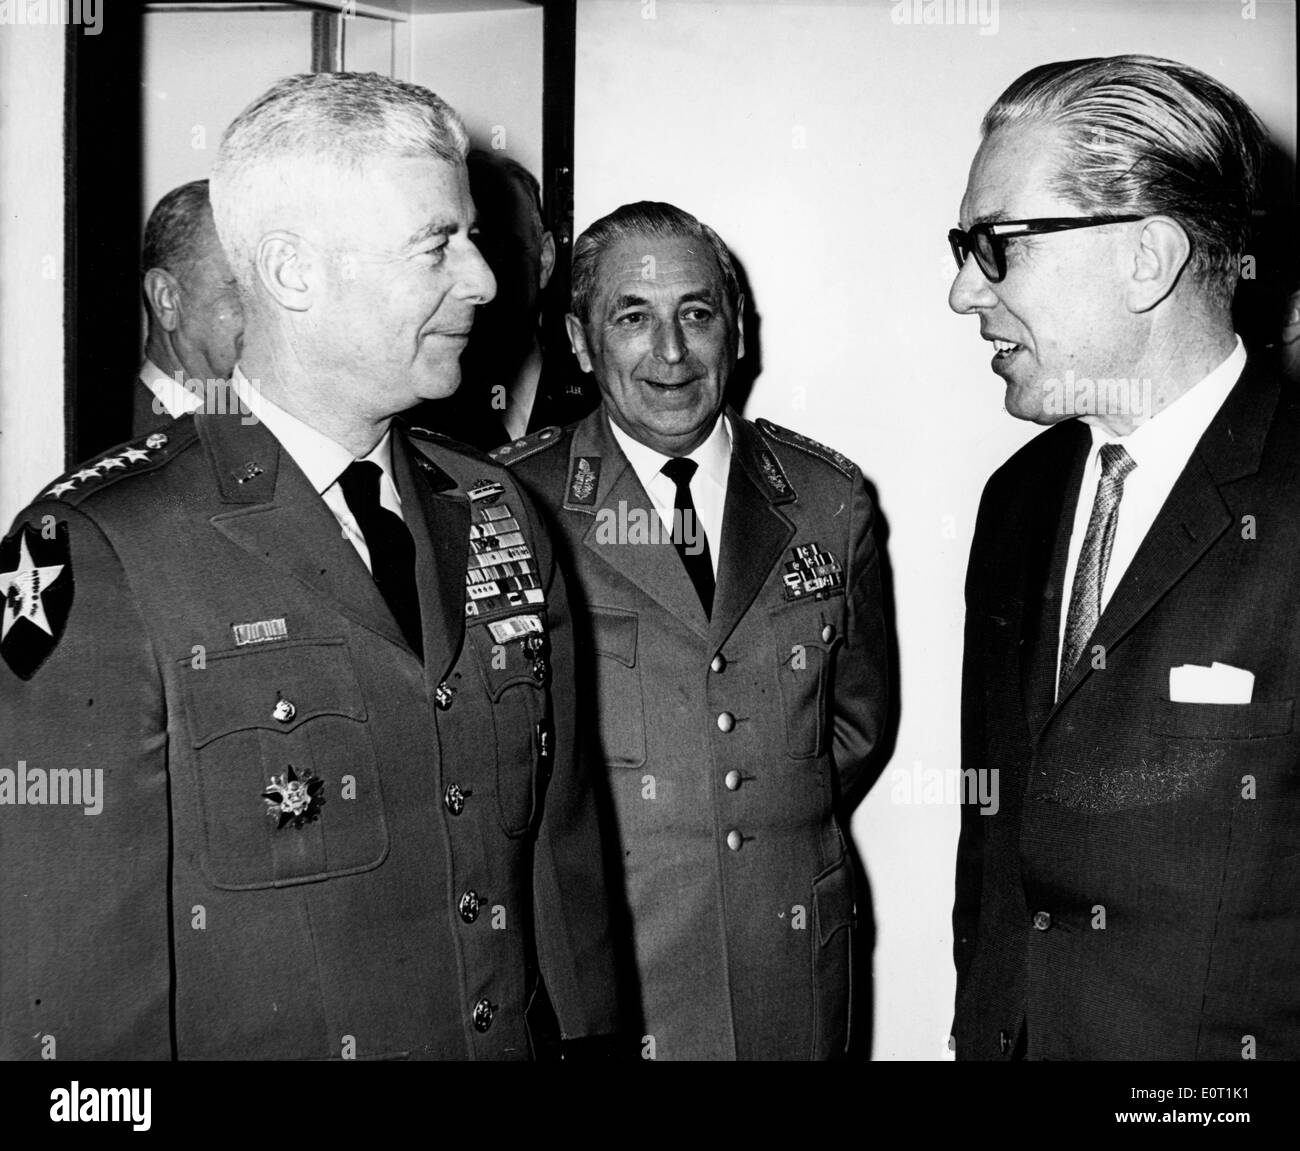 General Paul Freeman, Jr. talks with colleague Stock Photo